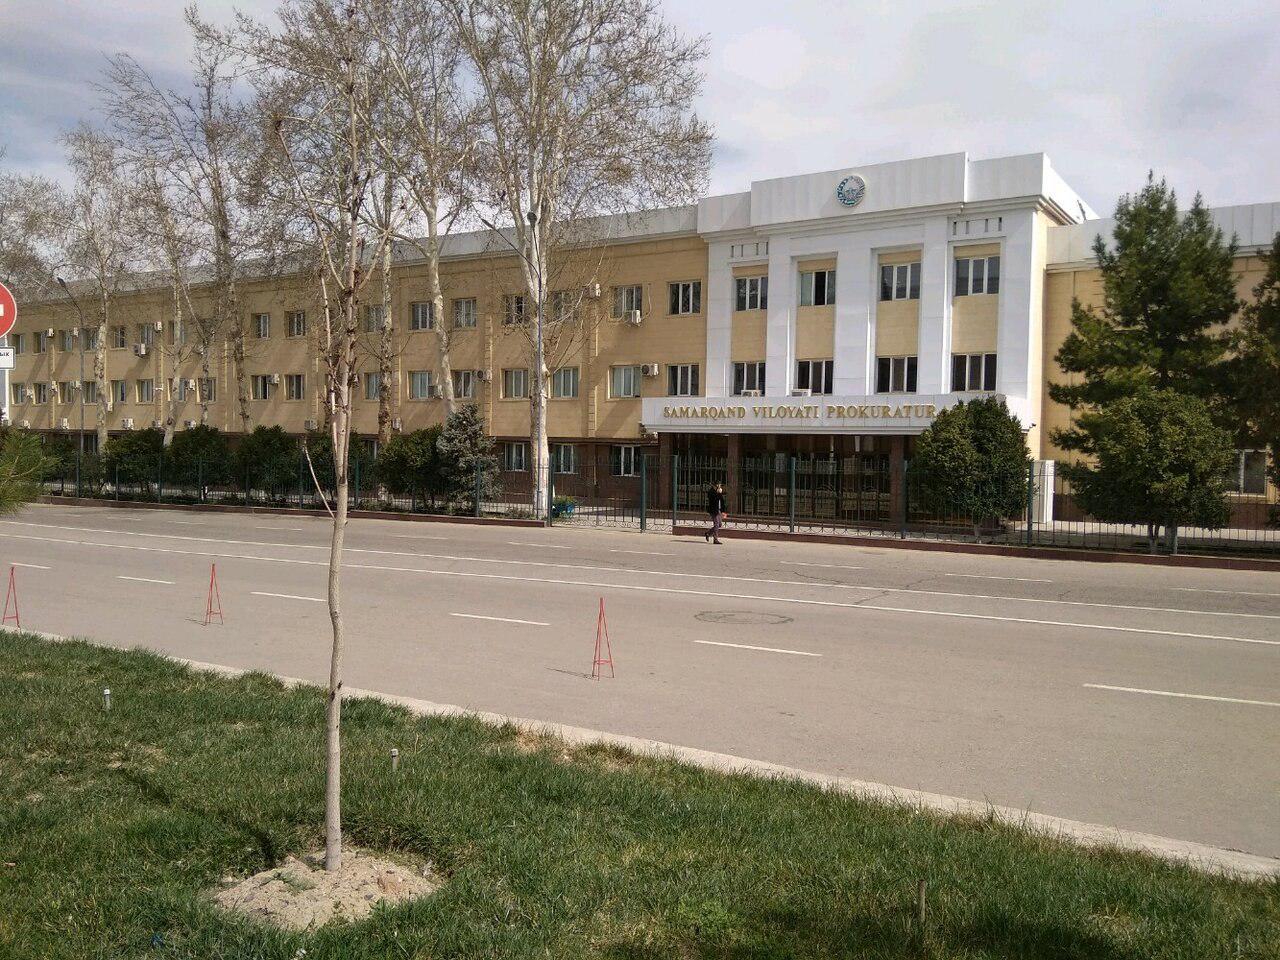 Foto: Samarqand viloyat prokuraturasi